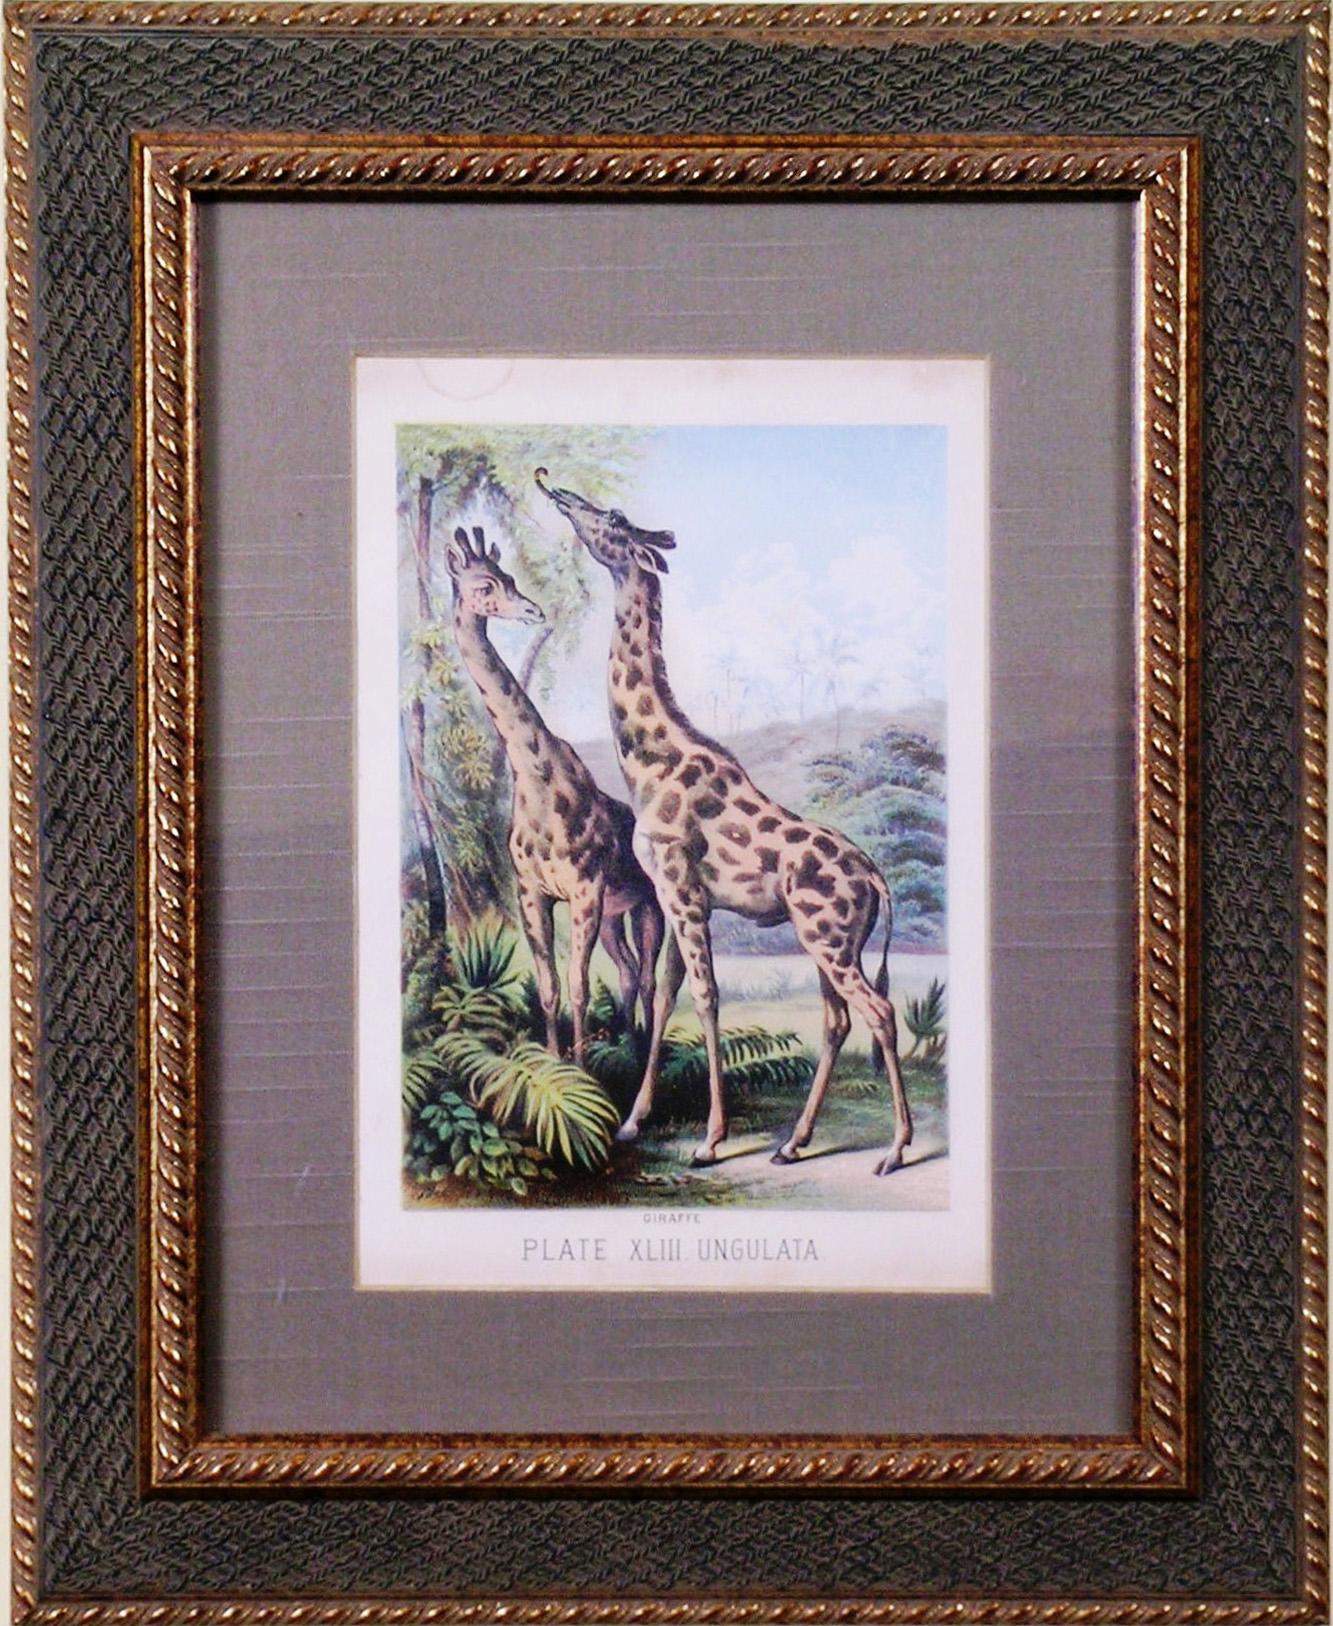 Plate XLIII Ungulata (Giraffes)